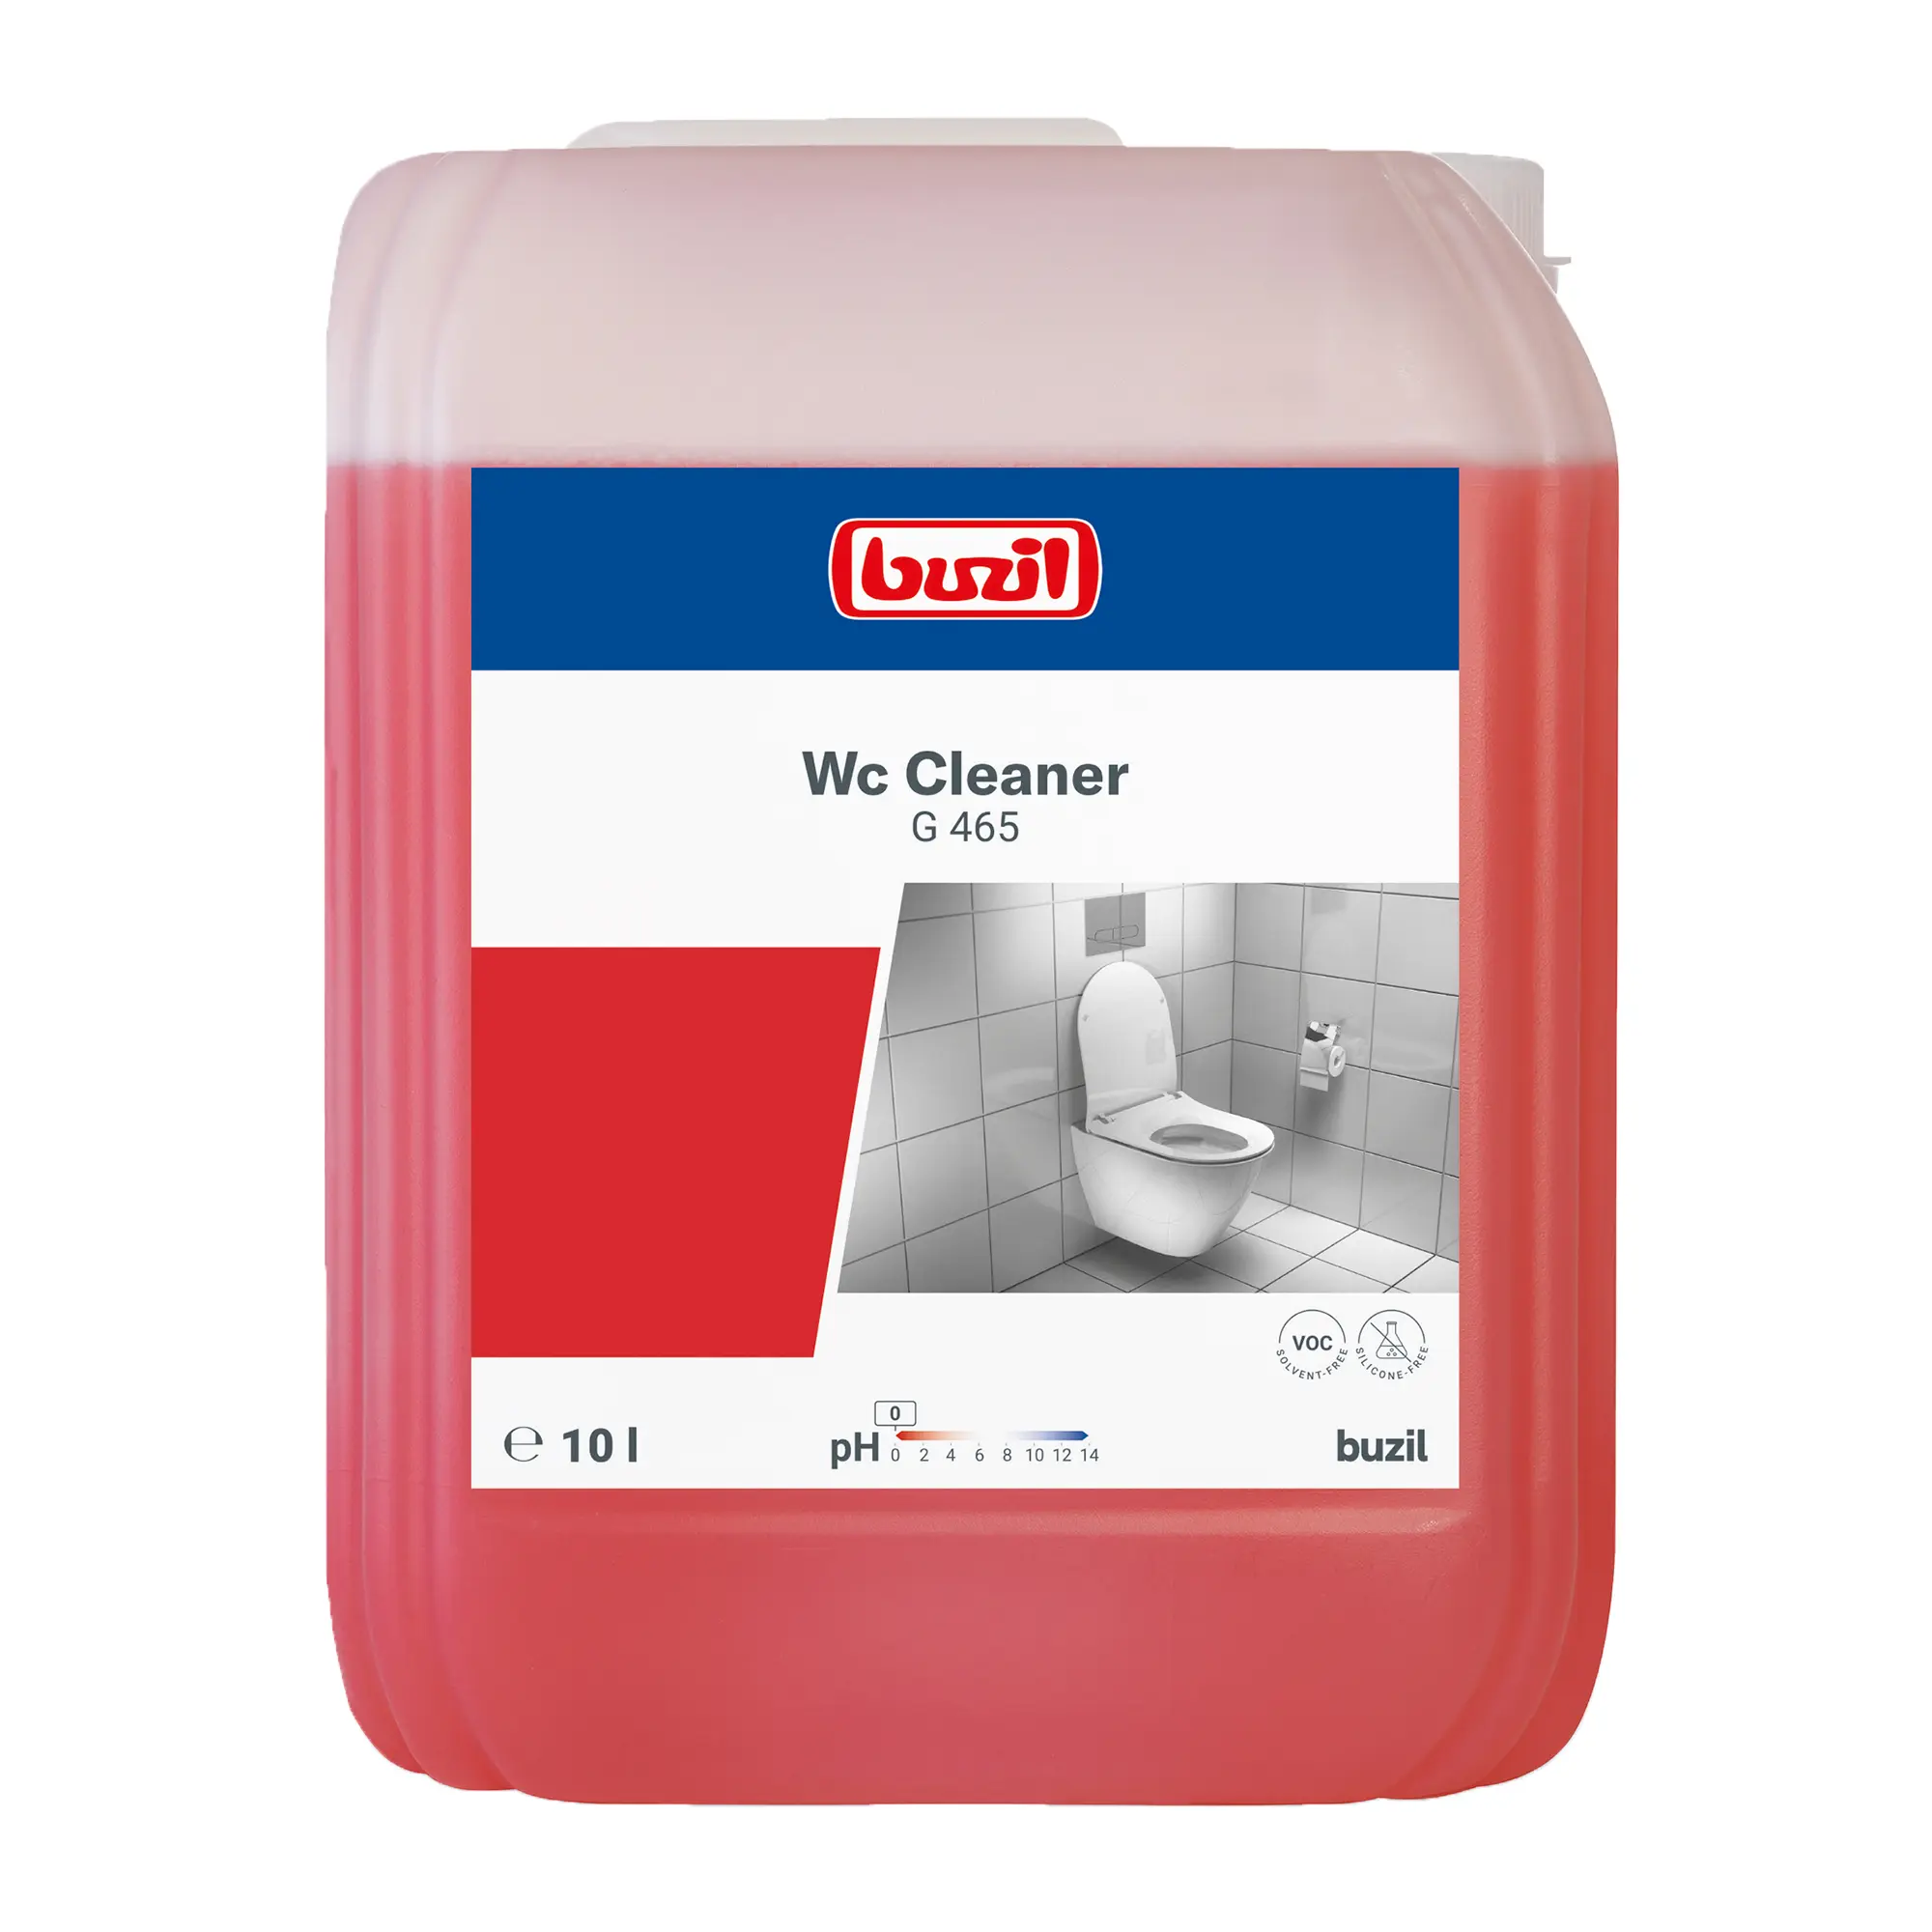 Buzil WC Cleaner G465 Sanitärgrundreiniger